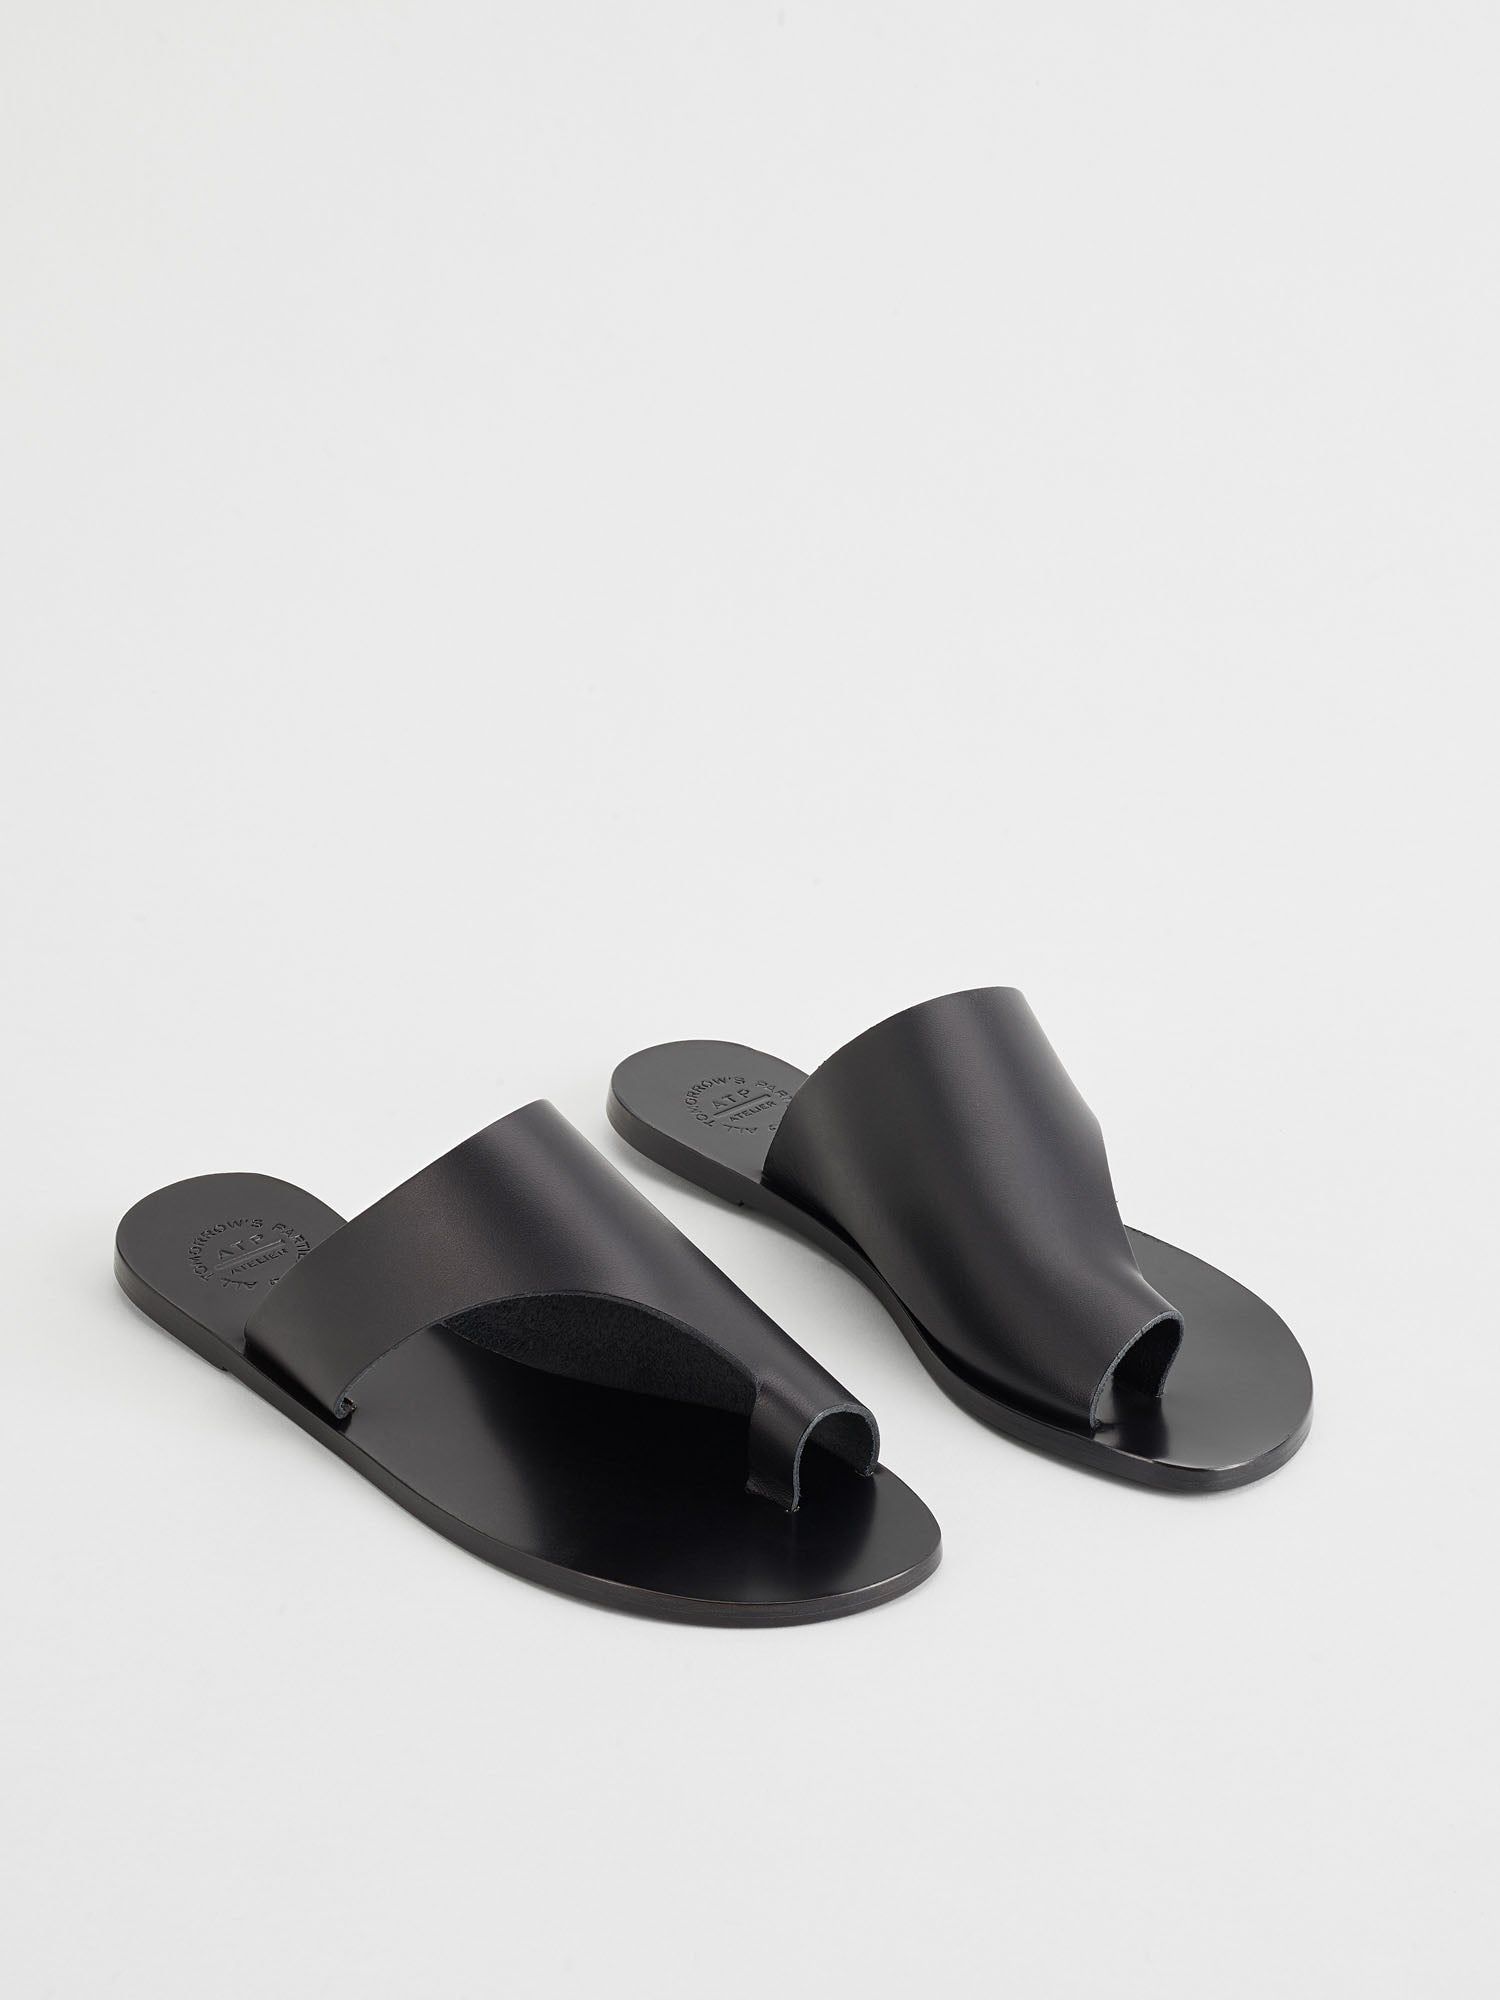 Kanon svimmelhed fornærme Rosa Black Leather Cutout sandals – ATP Atelier USA